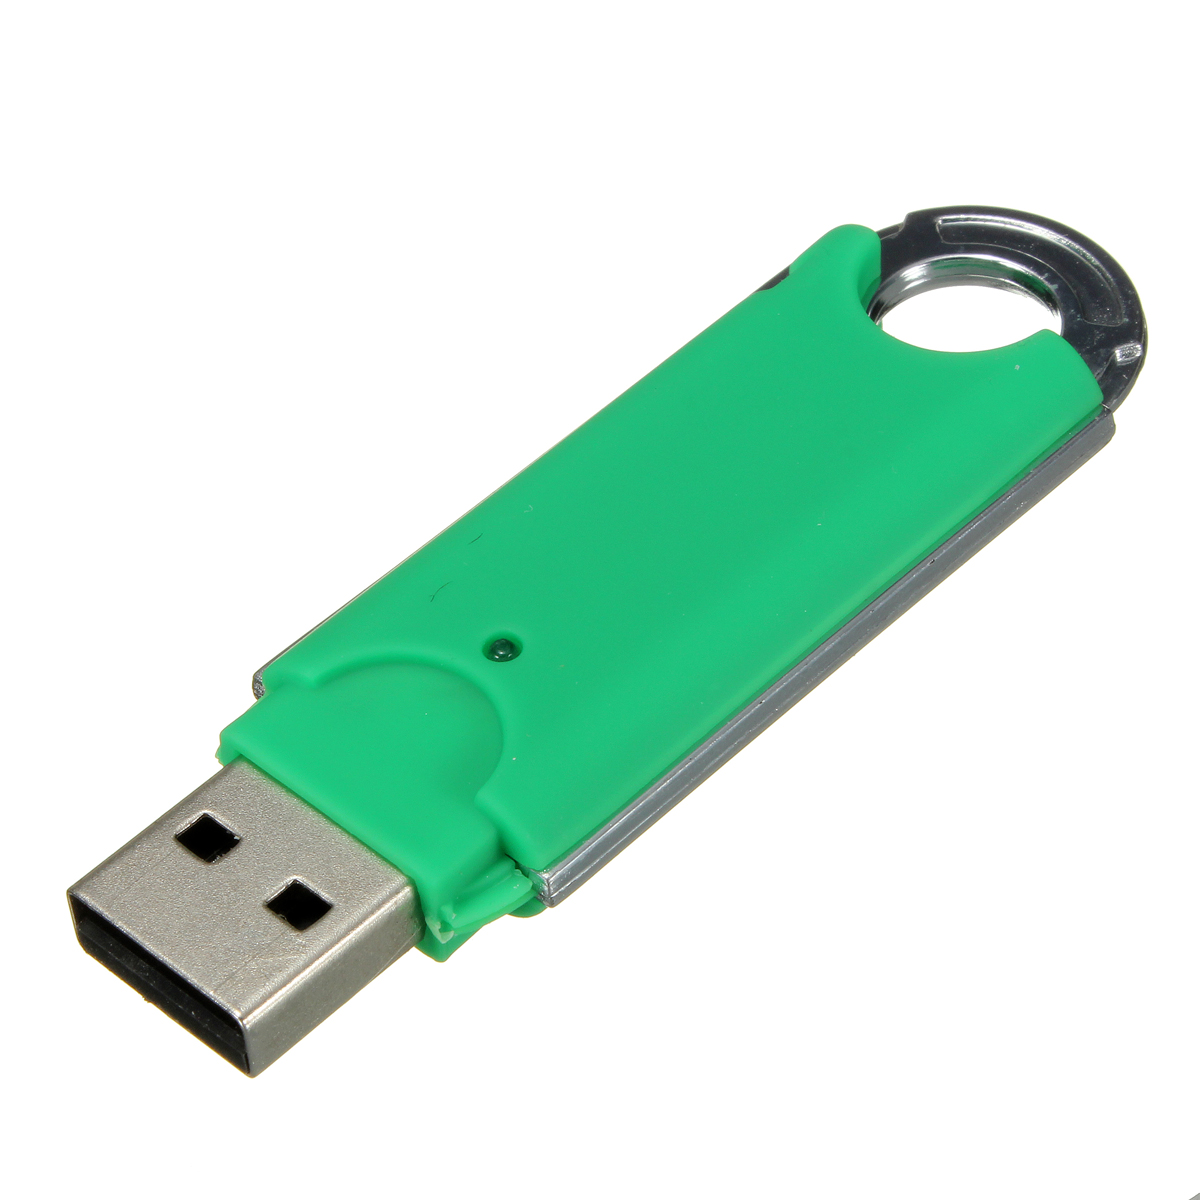 Bestrunner 16GB USB 2.0 Key Chain Model Flash Memory Stick Pen Drive Storage Thumb U Disk